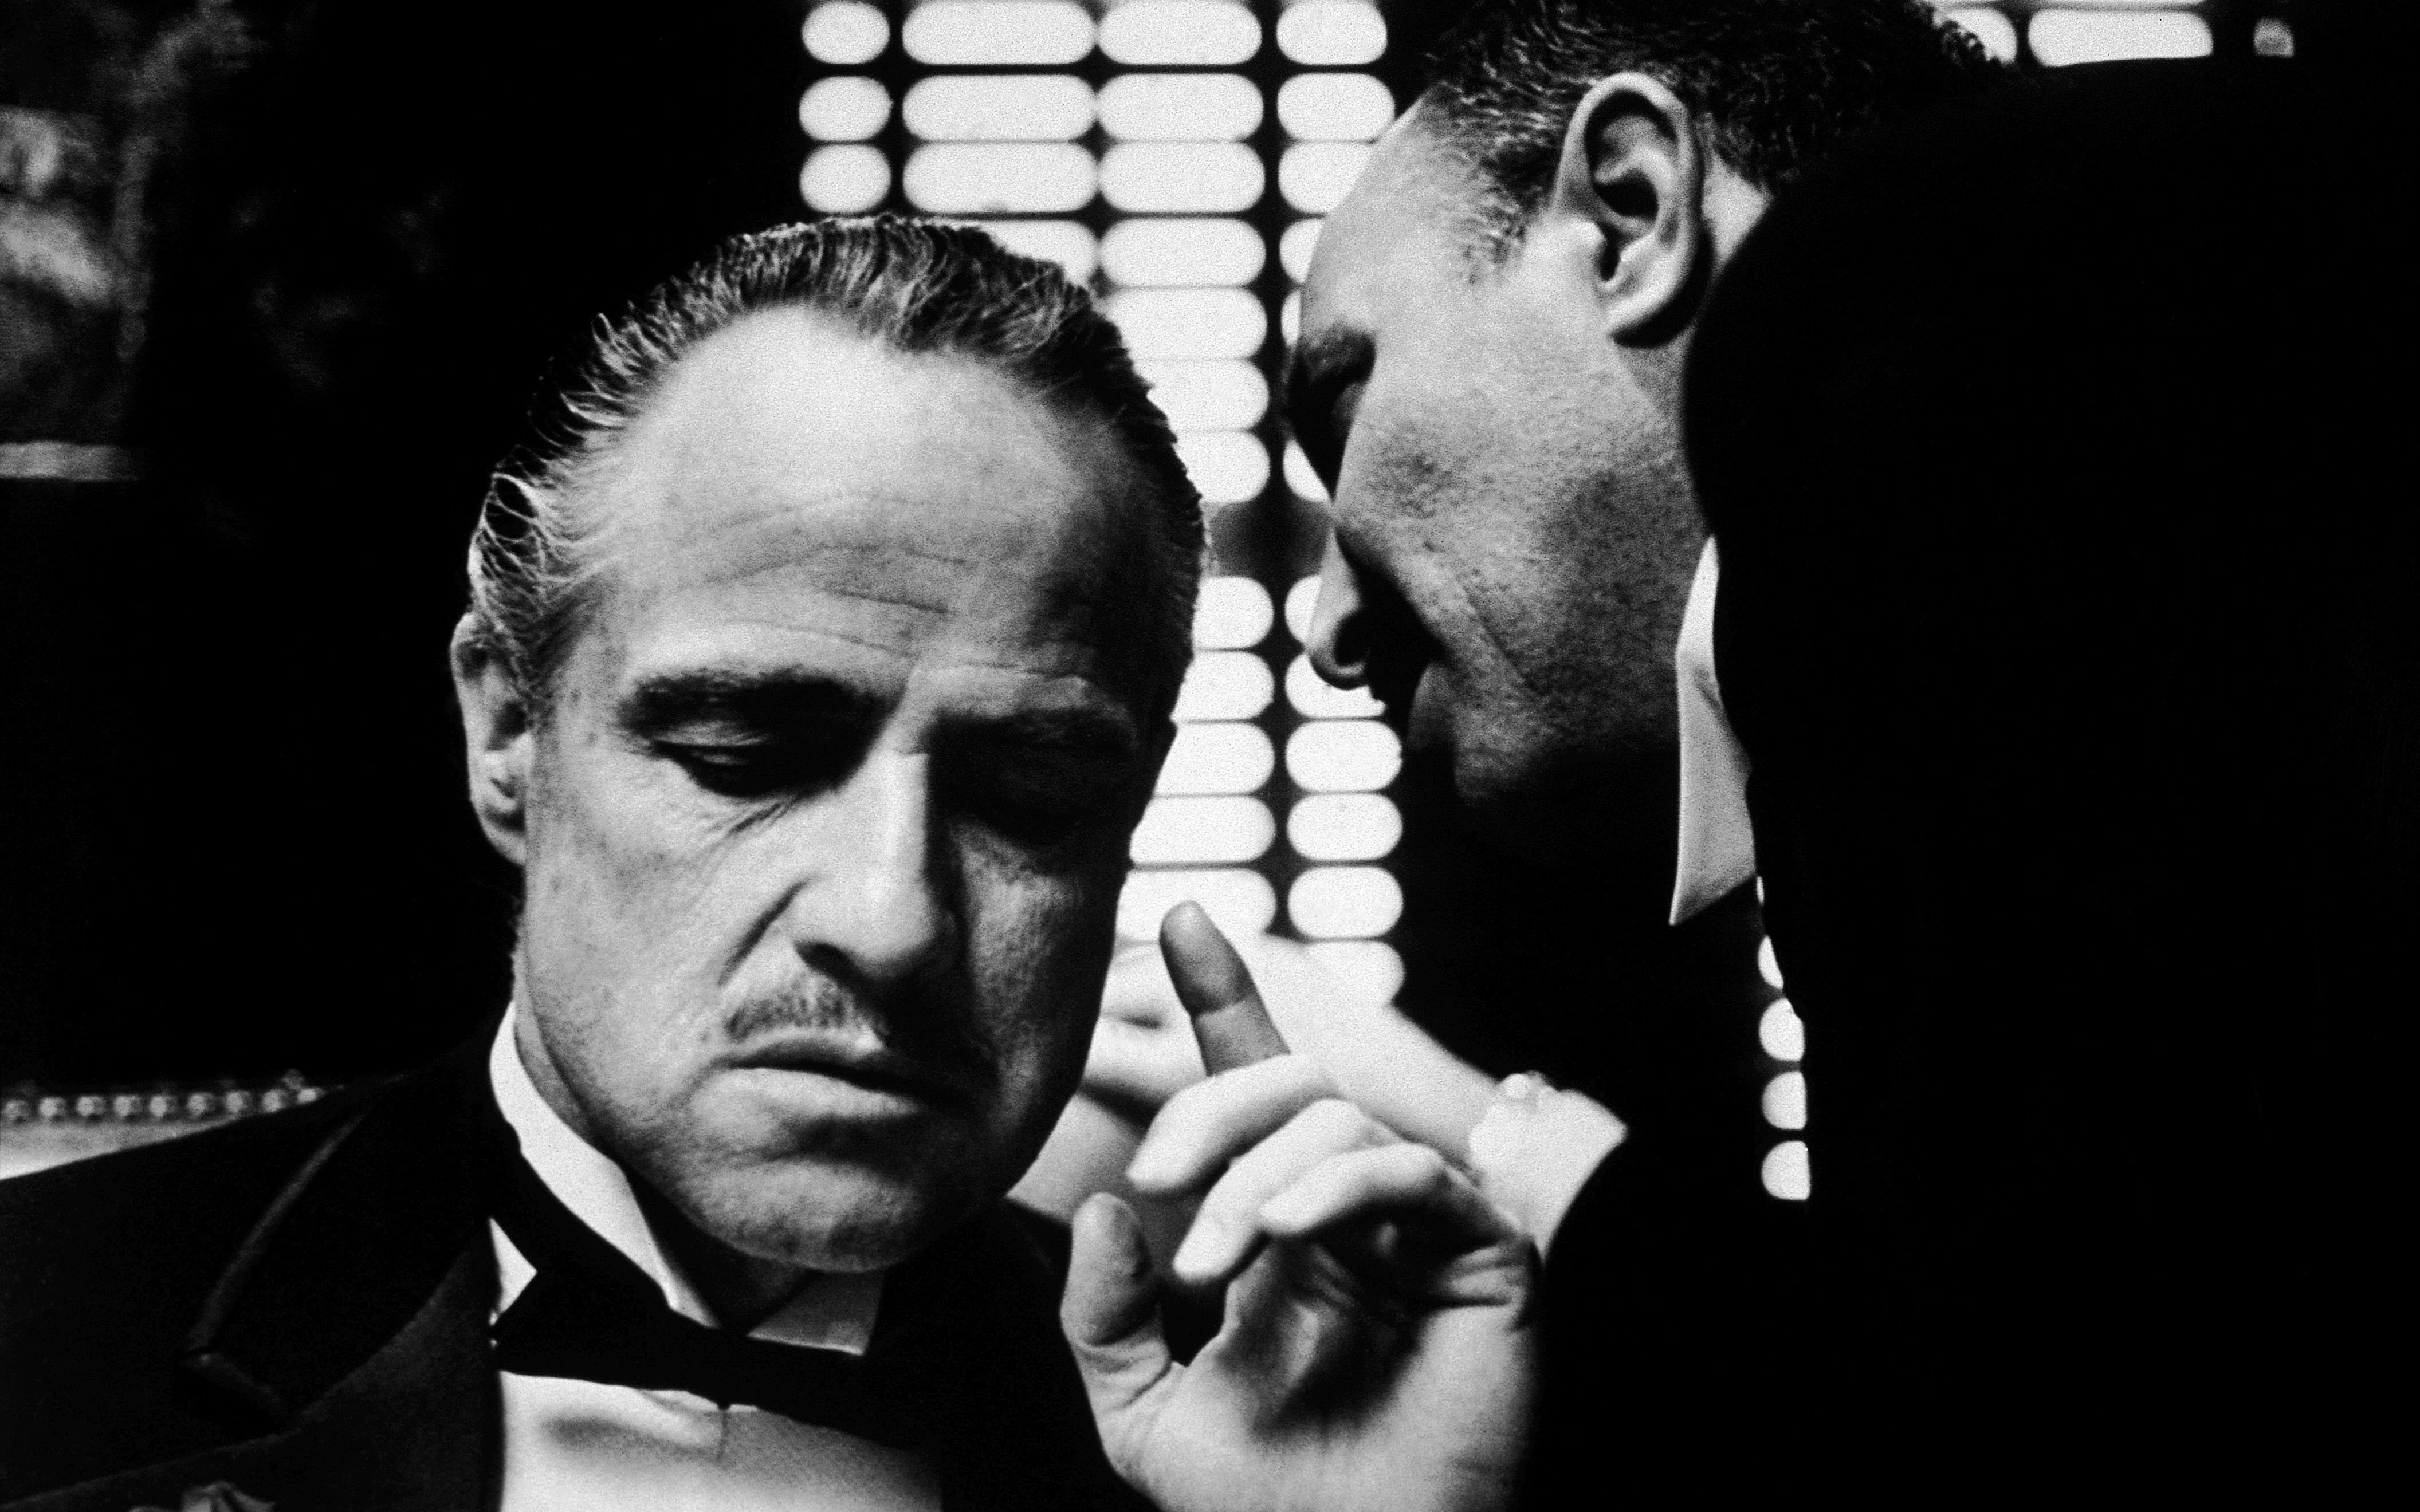 The Godfather Marlon Brando Movies Vito Corleone Wallpaper HD. Marlon brando movies, The godfather, The godfather wallpaper